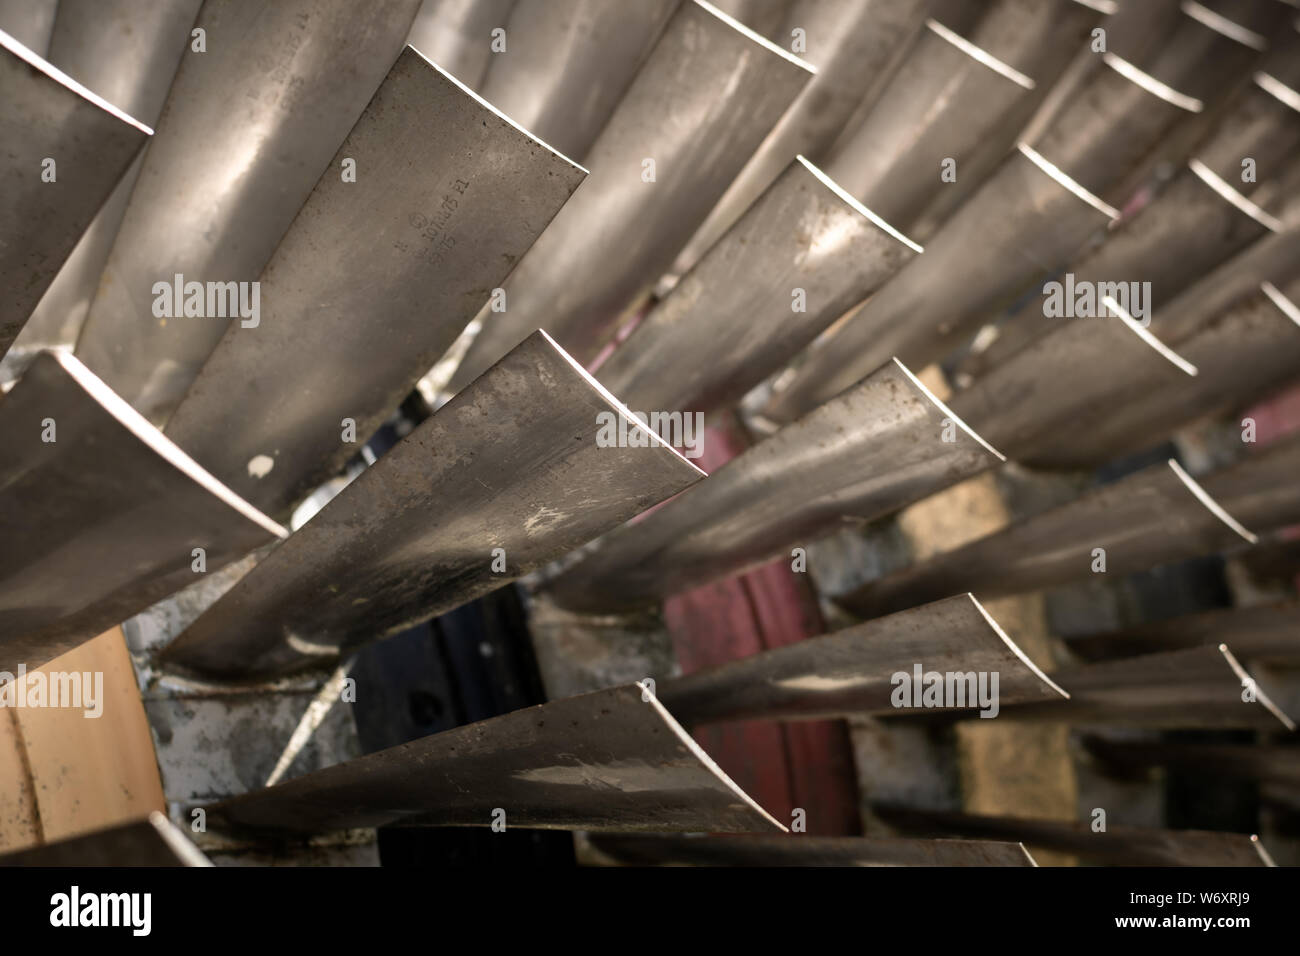 turbine of a jet engine Stock Photo